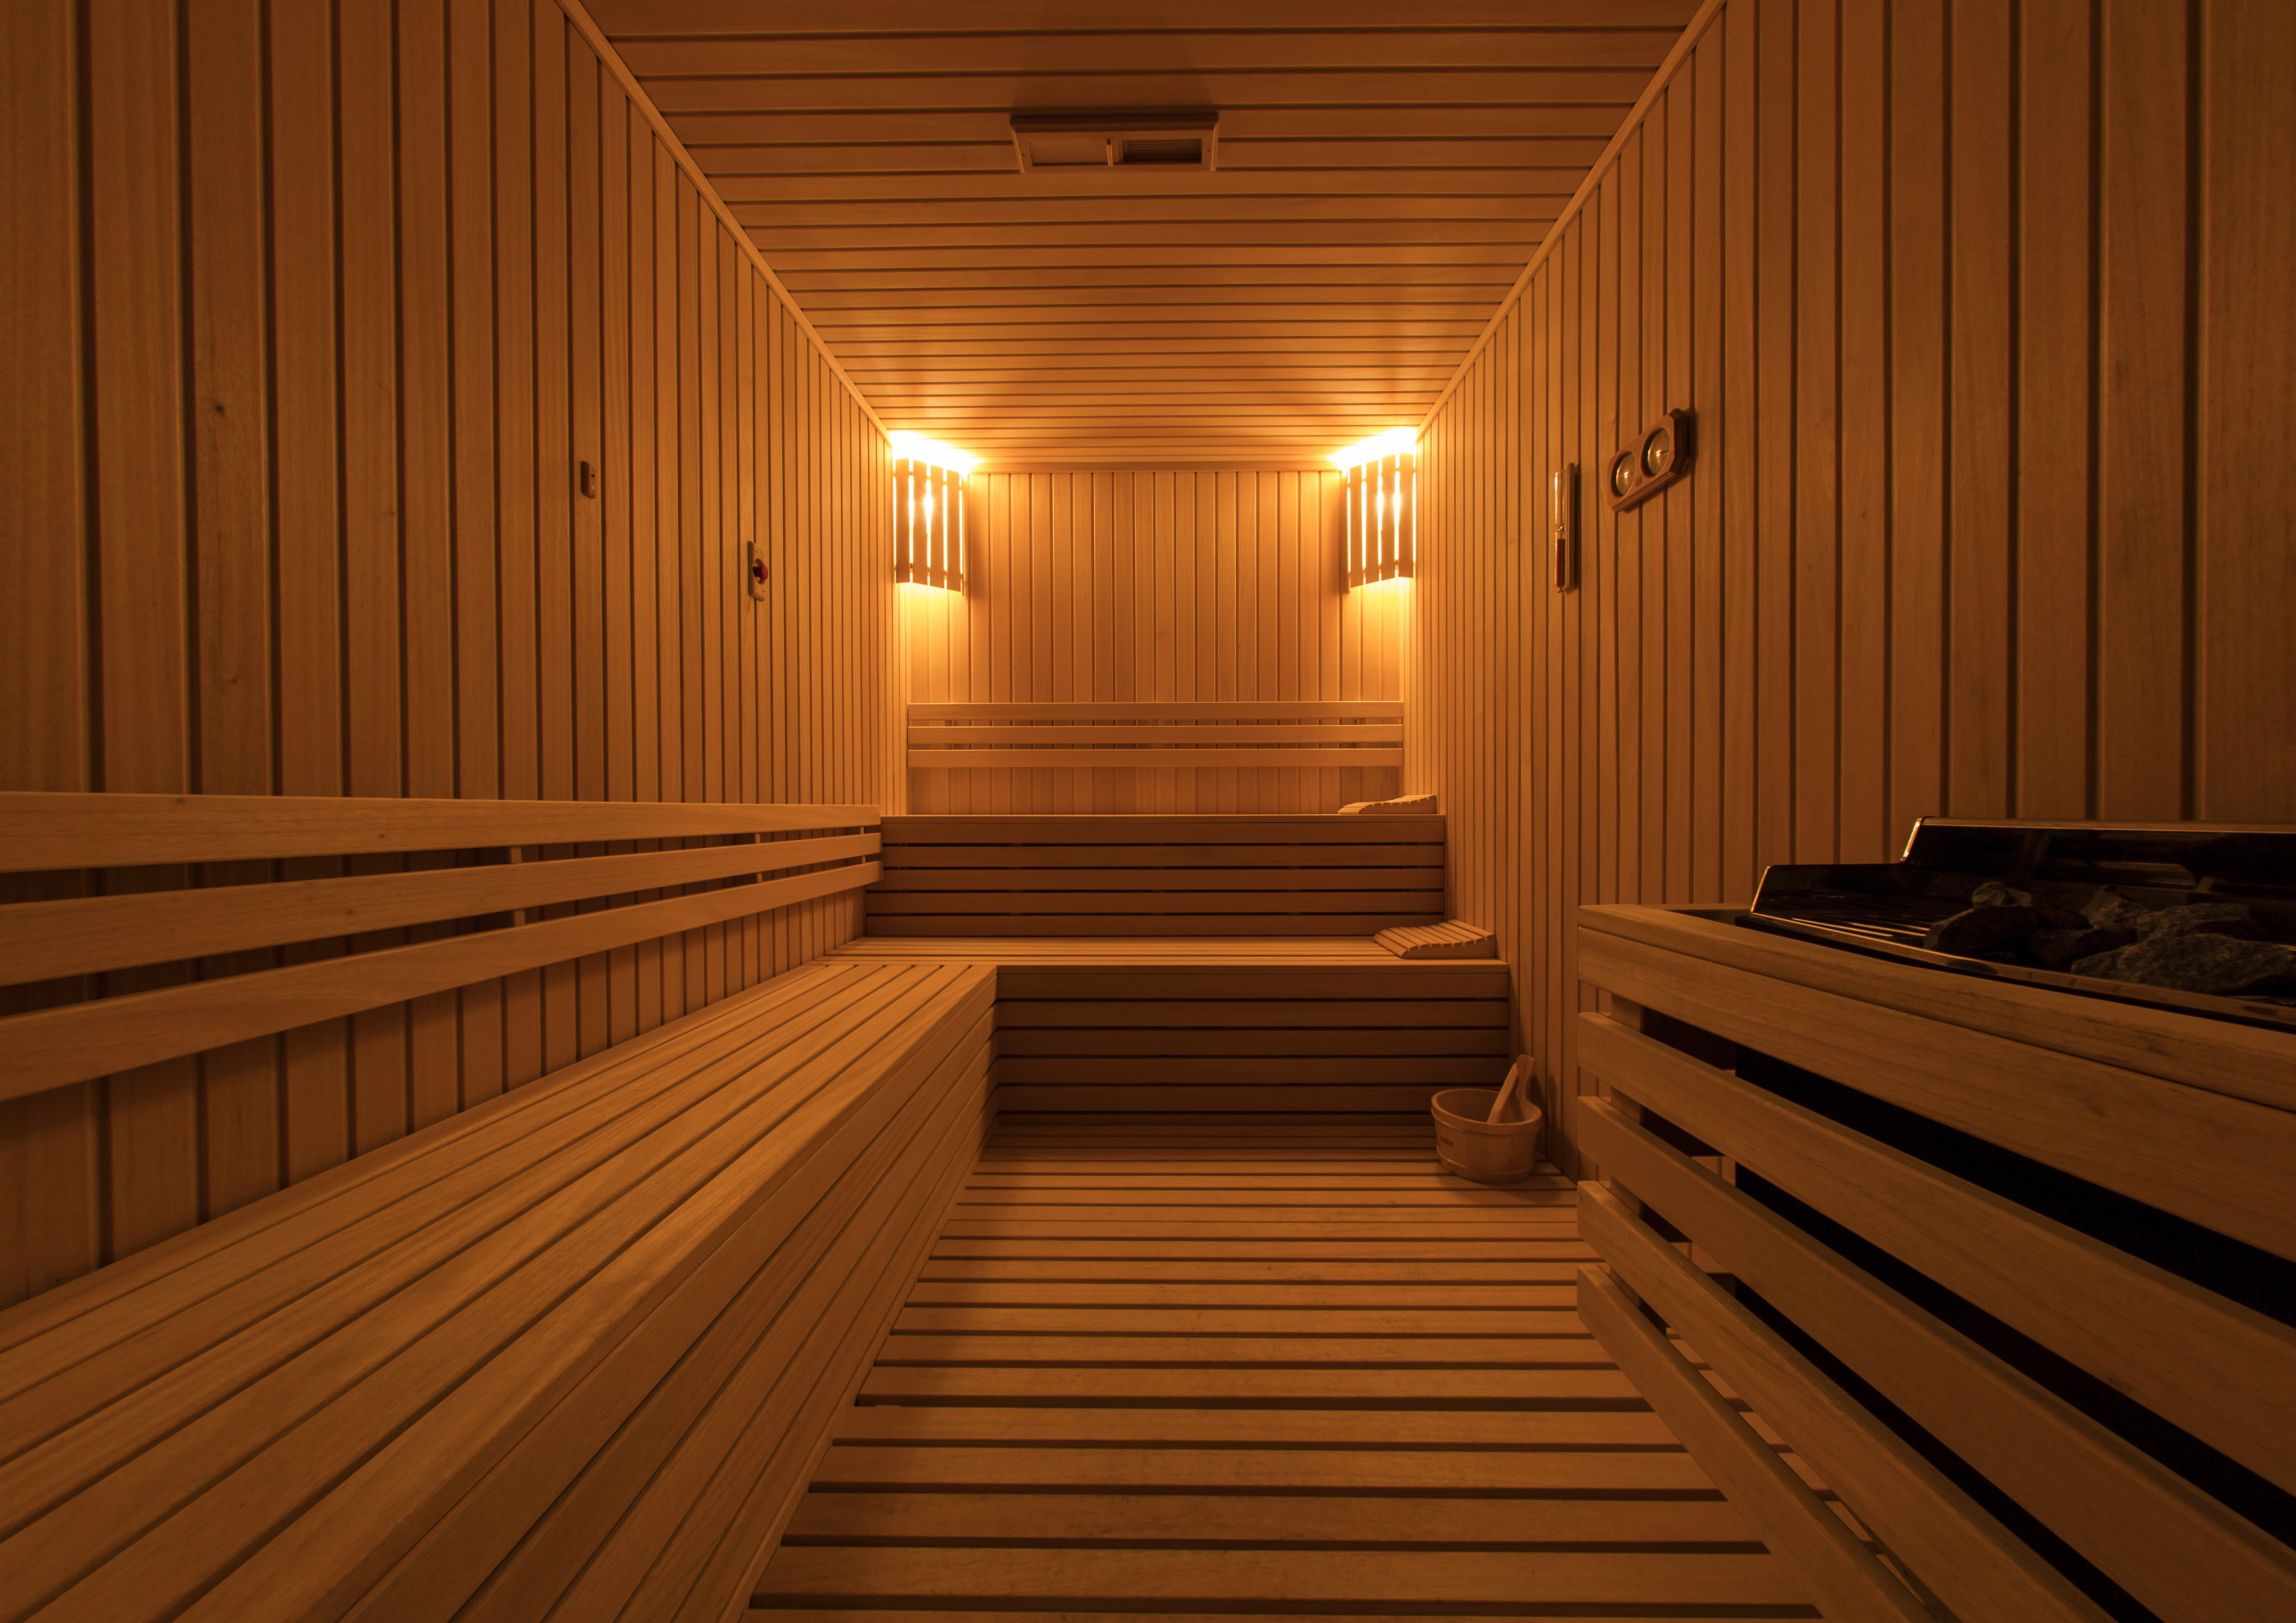 The steam sauna room фото 85